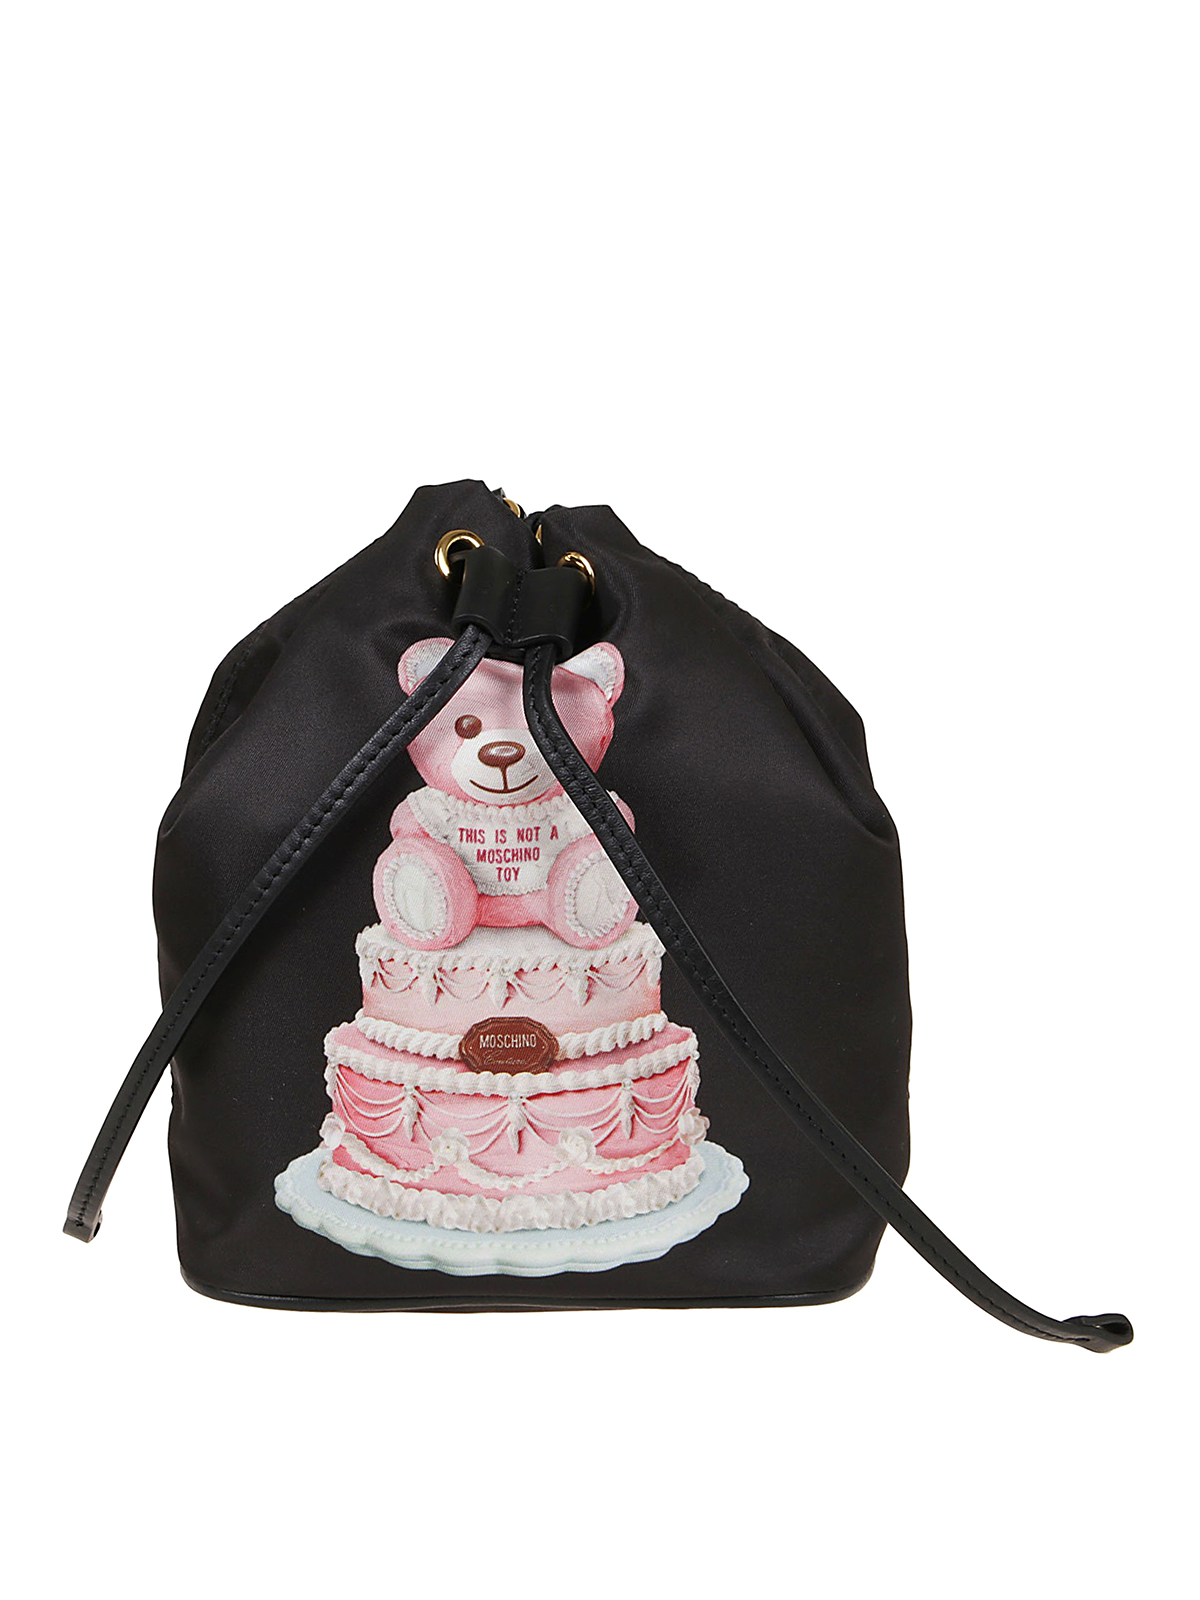 MOSCHINO 【 関税込み 】 Cake Teddy Bear Bucket Bag